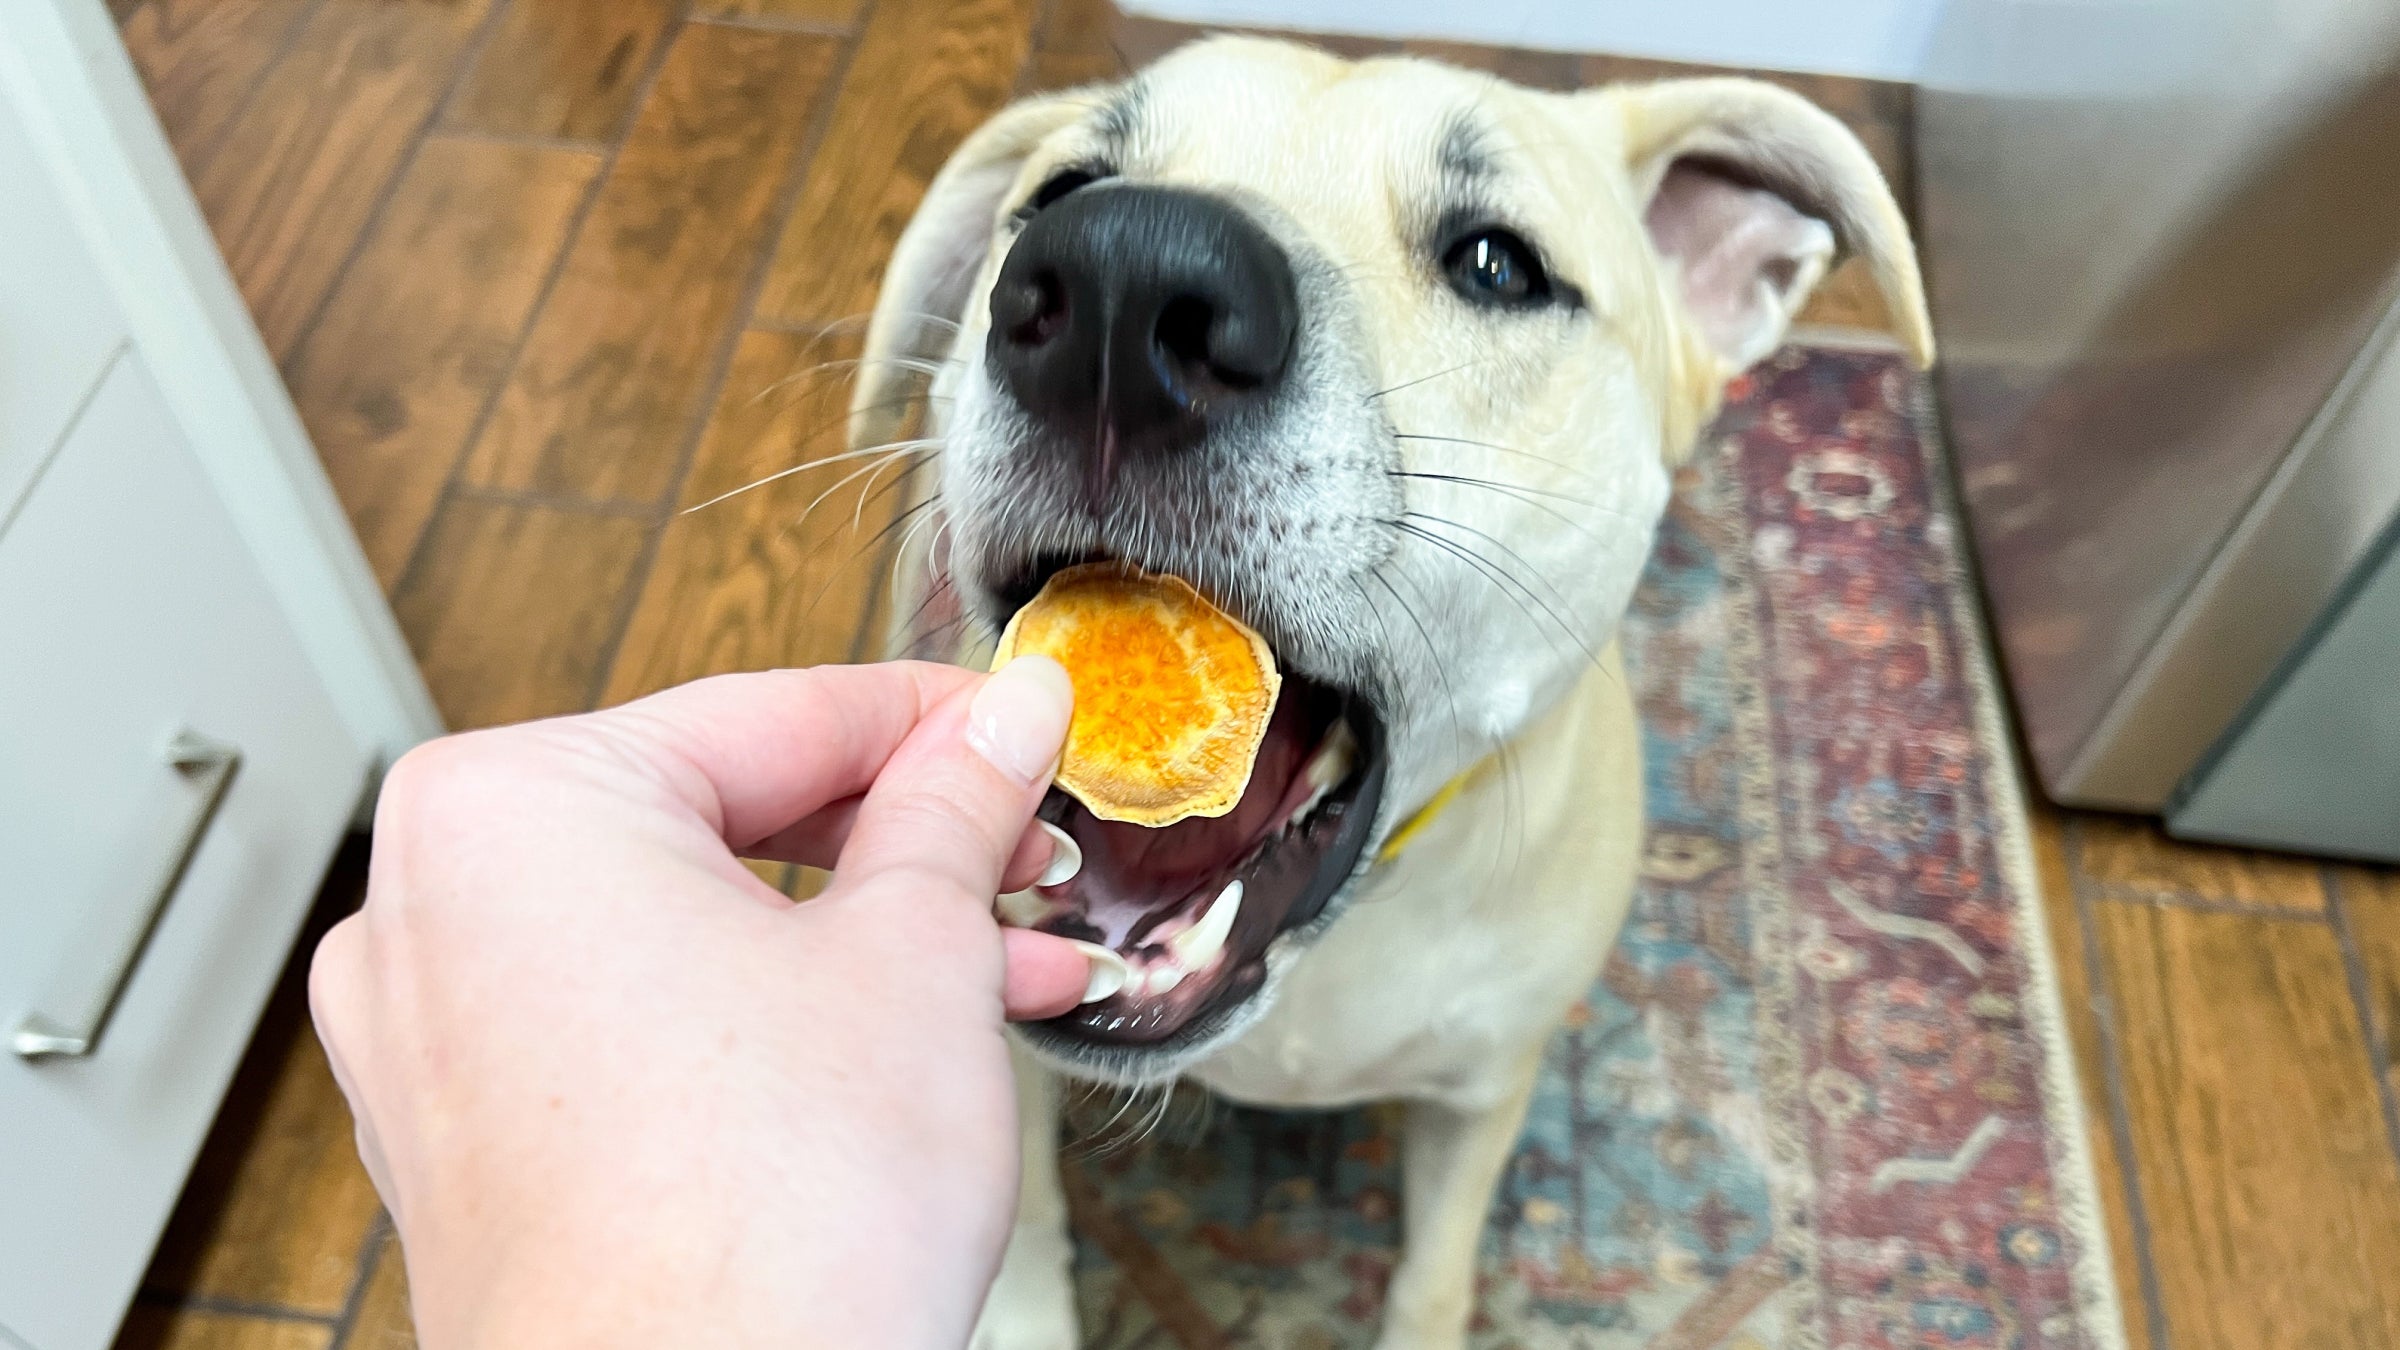 A tan dog happily takes a sweet potato chew into its mouth